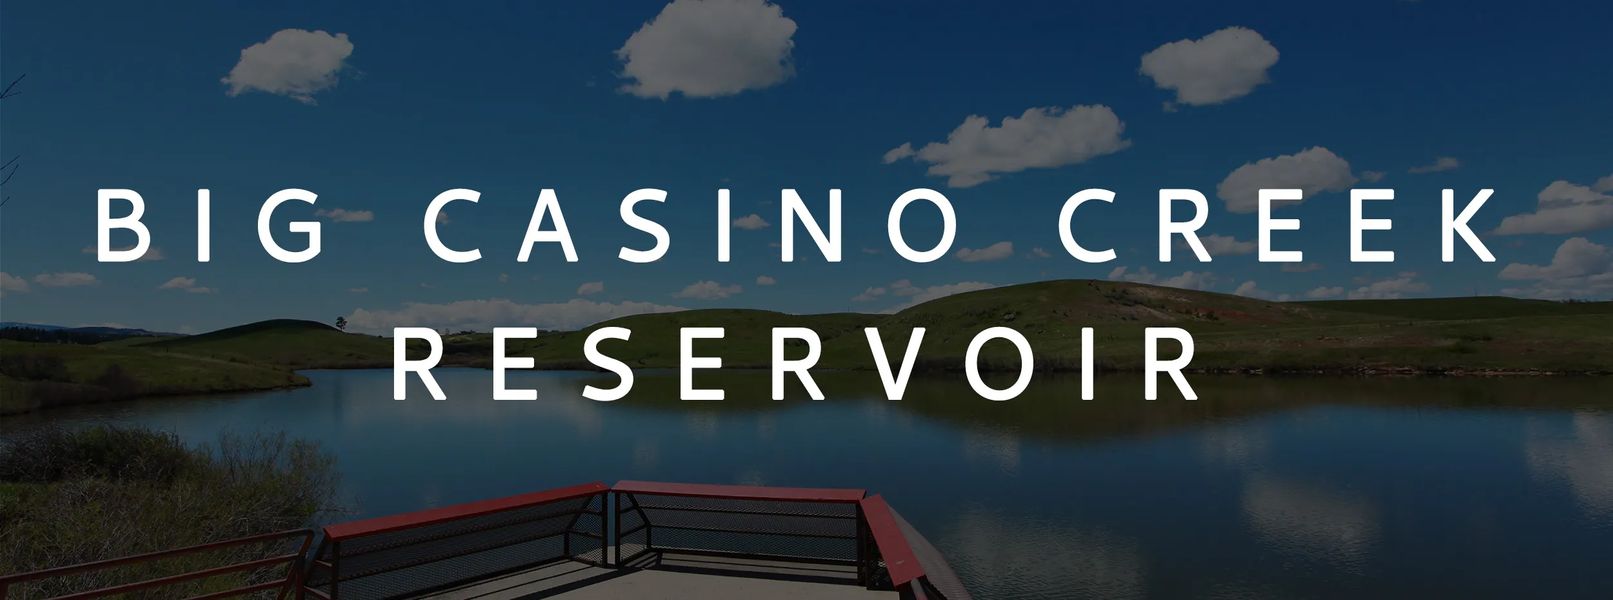 Big Casino Creek Reservoir